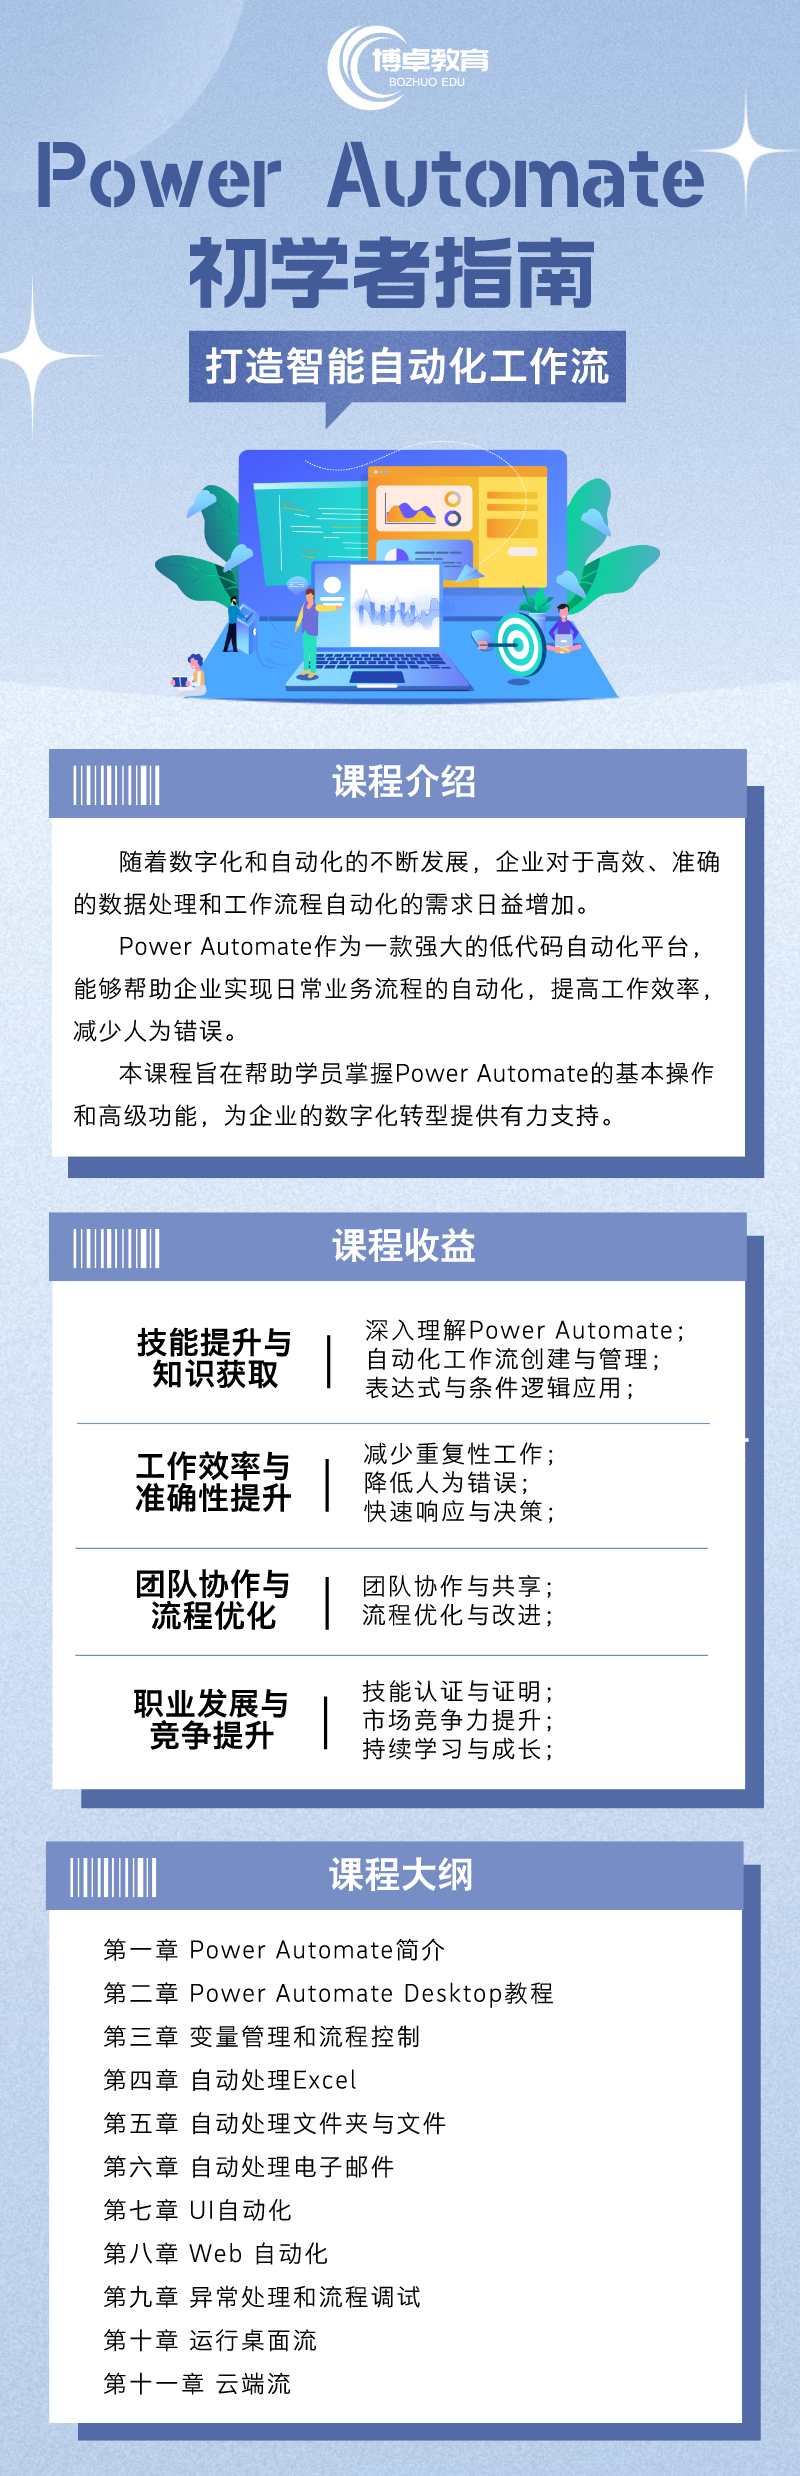 Power Automate 课程简介图.png